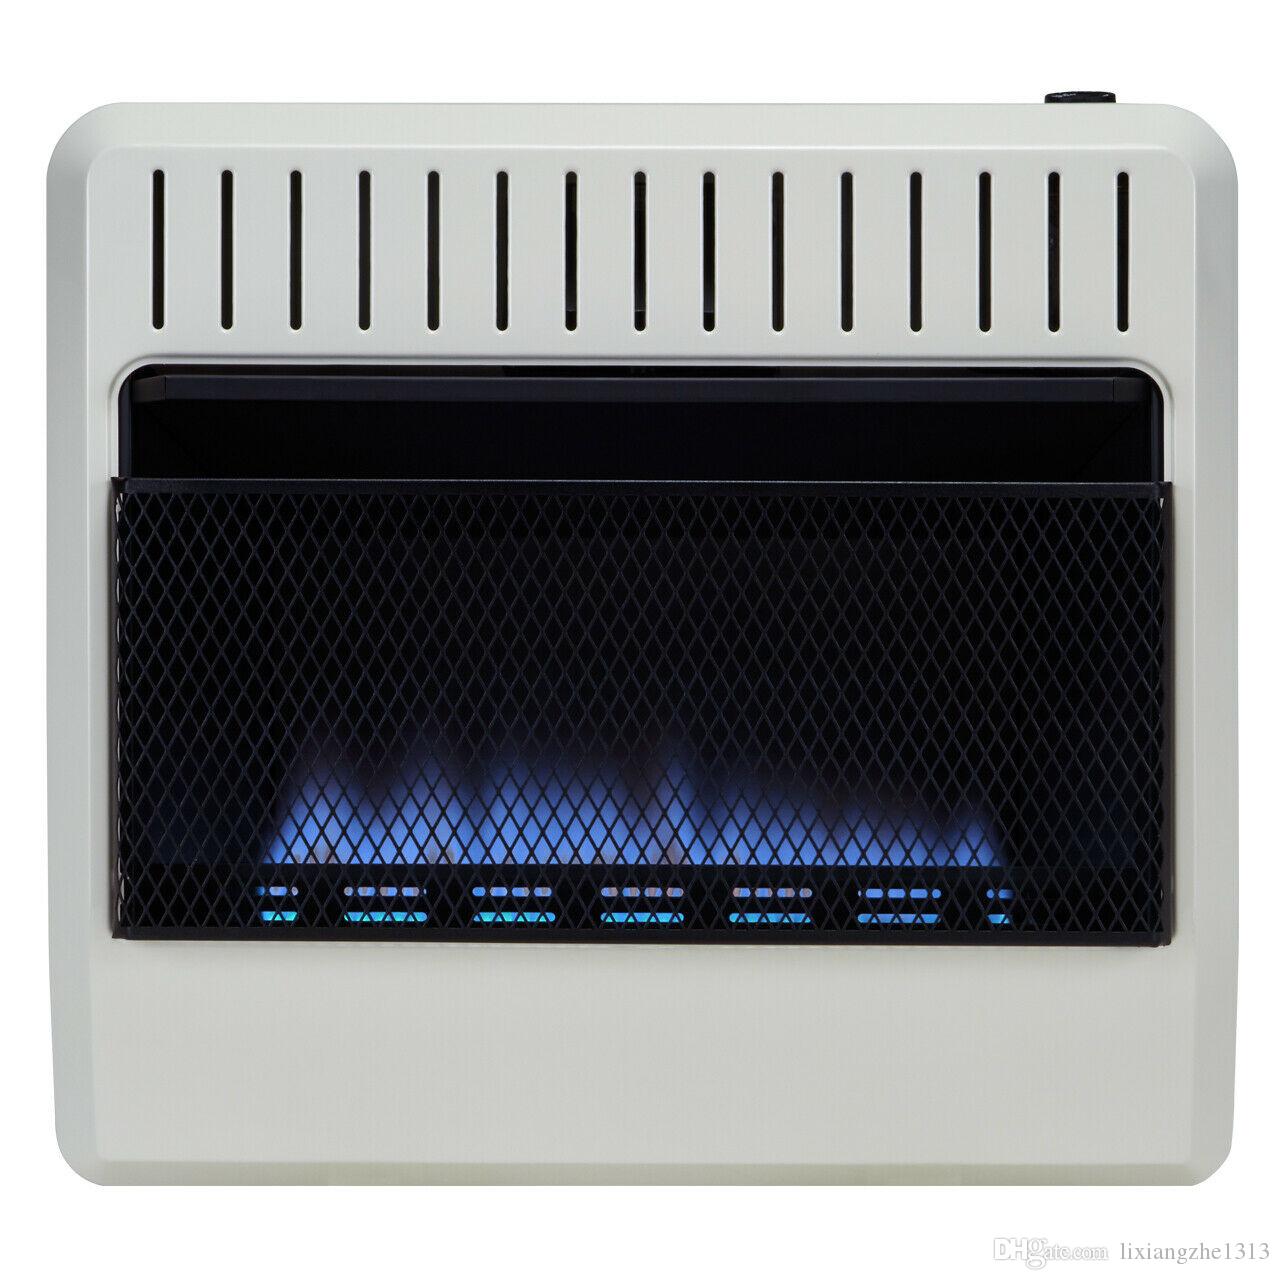 Procom Gas Fireplace Best Of 2019 Avenger Recon Dual Fuel Ventless Blue Flame Heater 30k Btu Model Fdt30bfa R From Lixiangzhe1313 $23 12